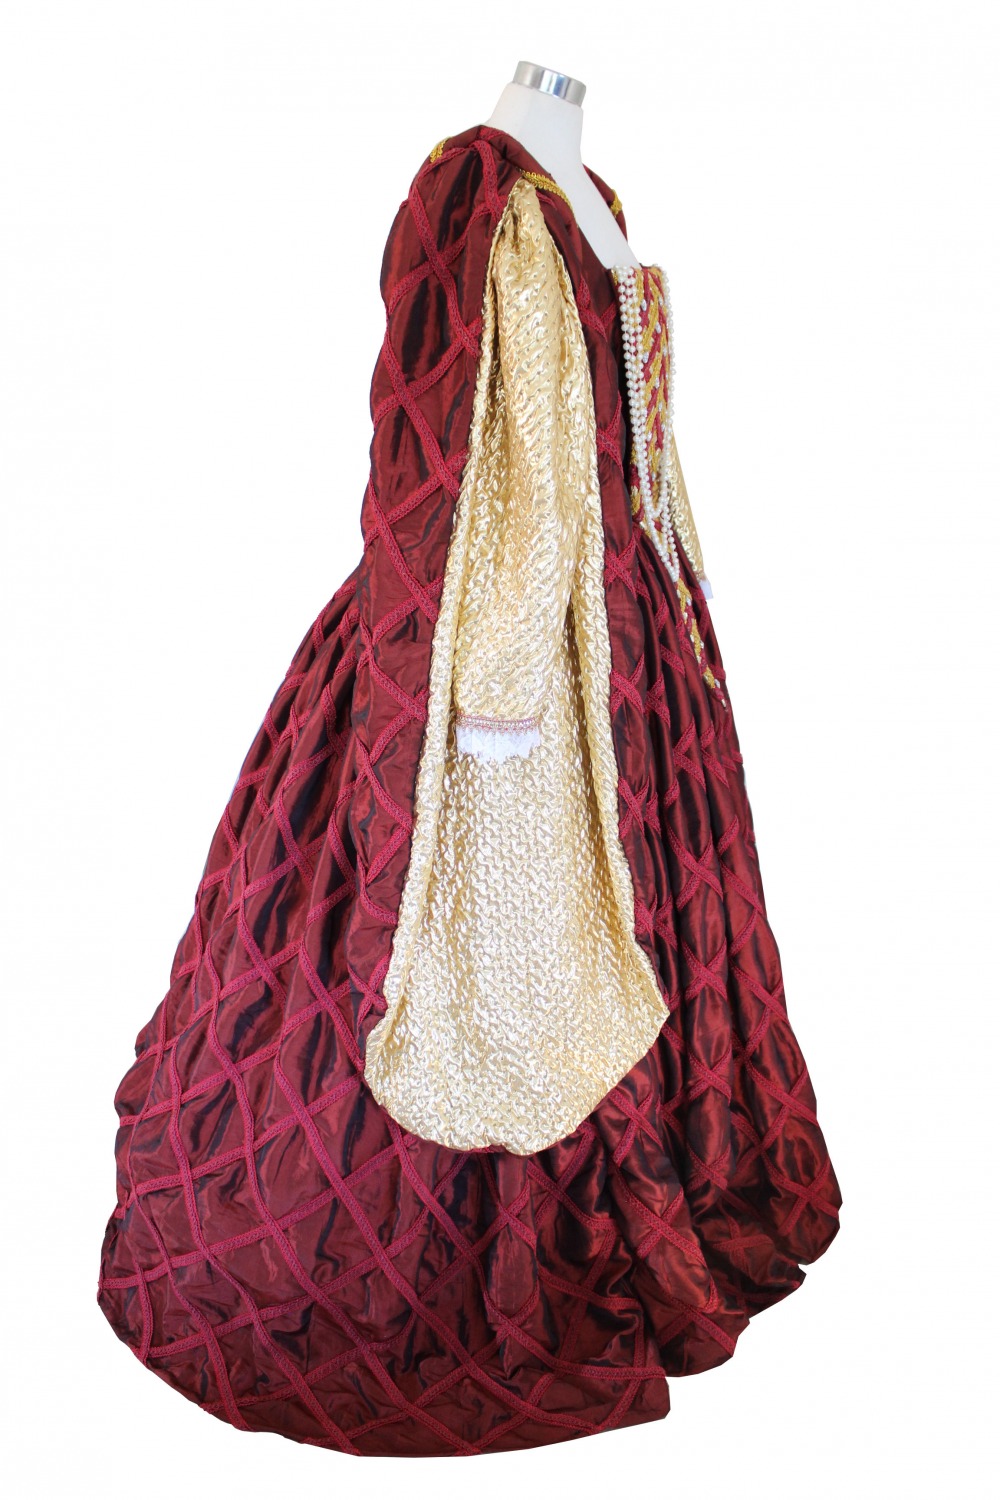 Ladies Deluxe Tudor Elizabethan Queen Elizabeth 1 Theatrical Costume Size 10 - 12 Image